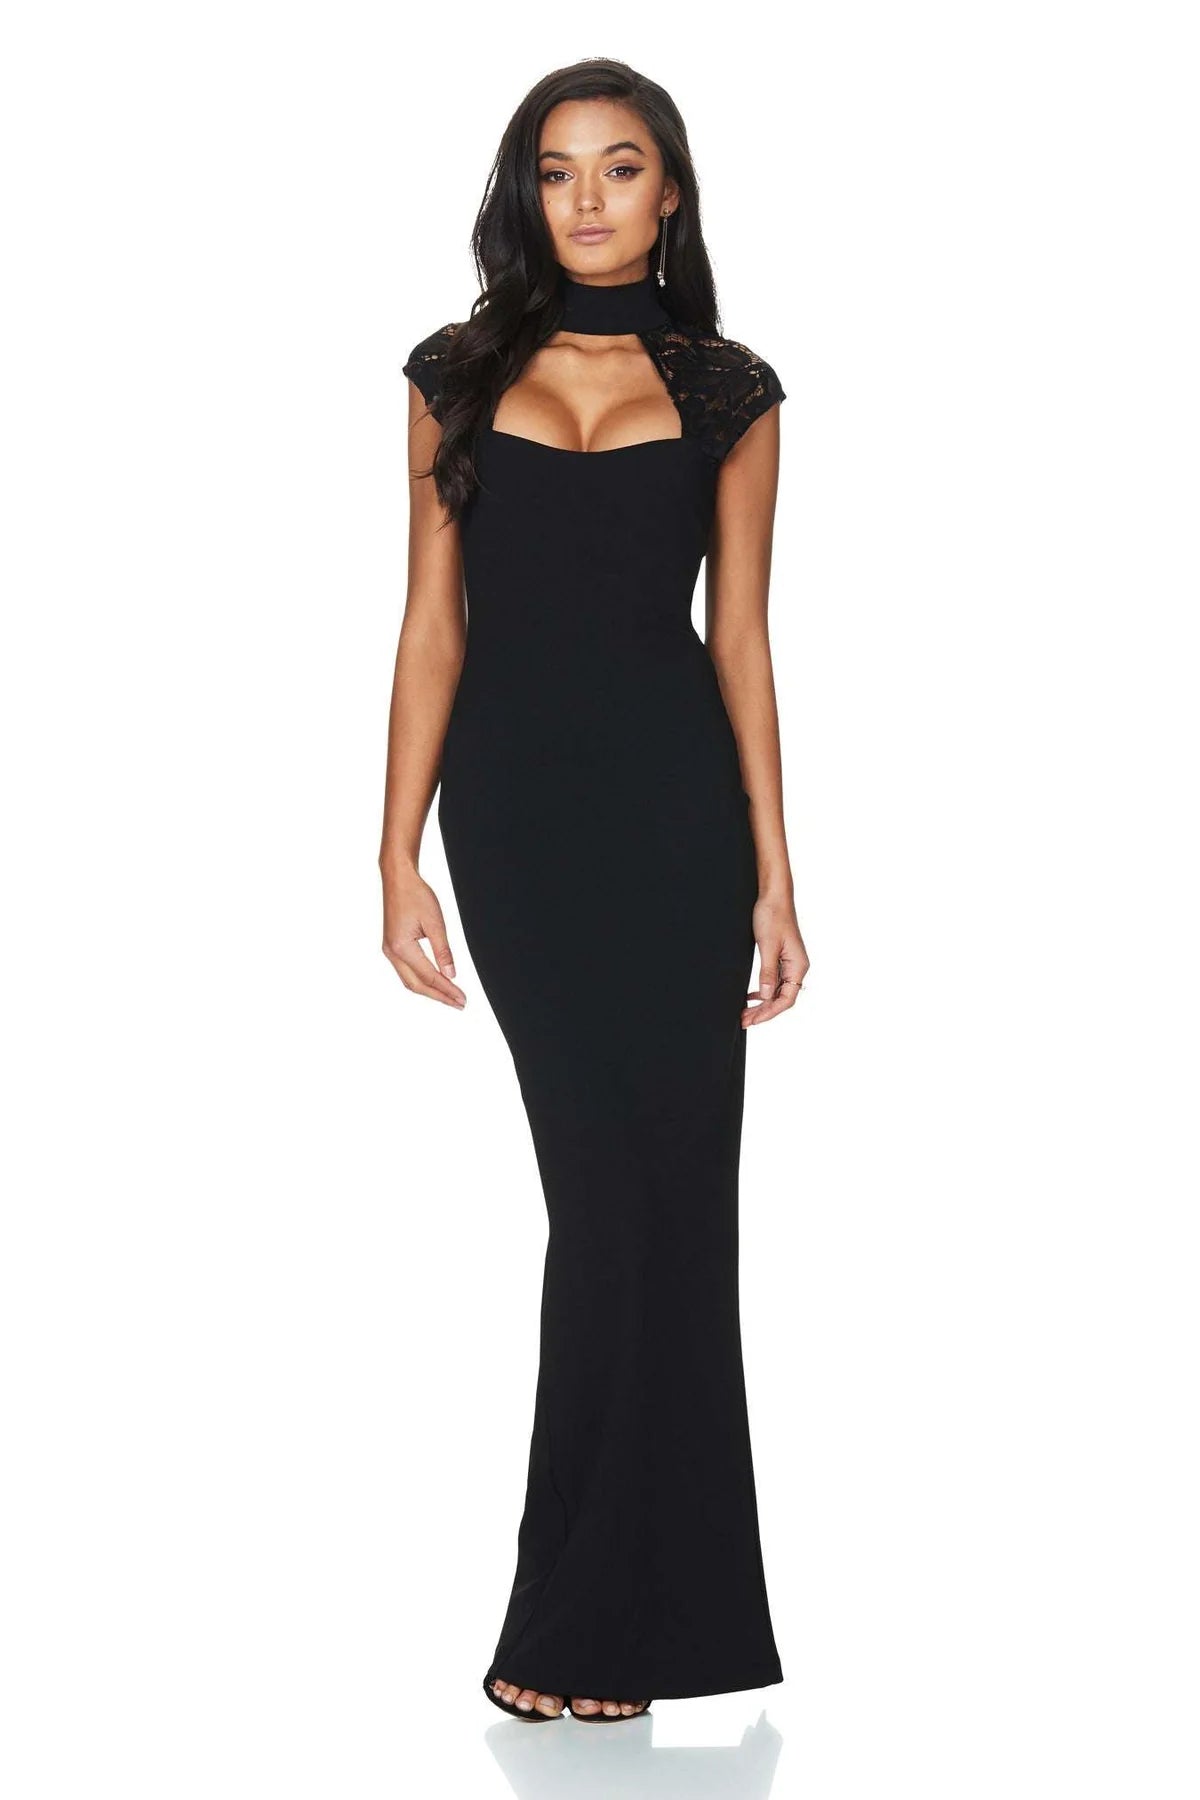 NOOKIE Lady Lace Dress (Black)- RRP $259